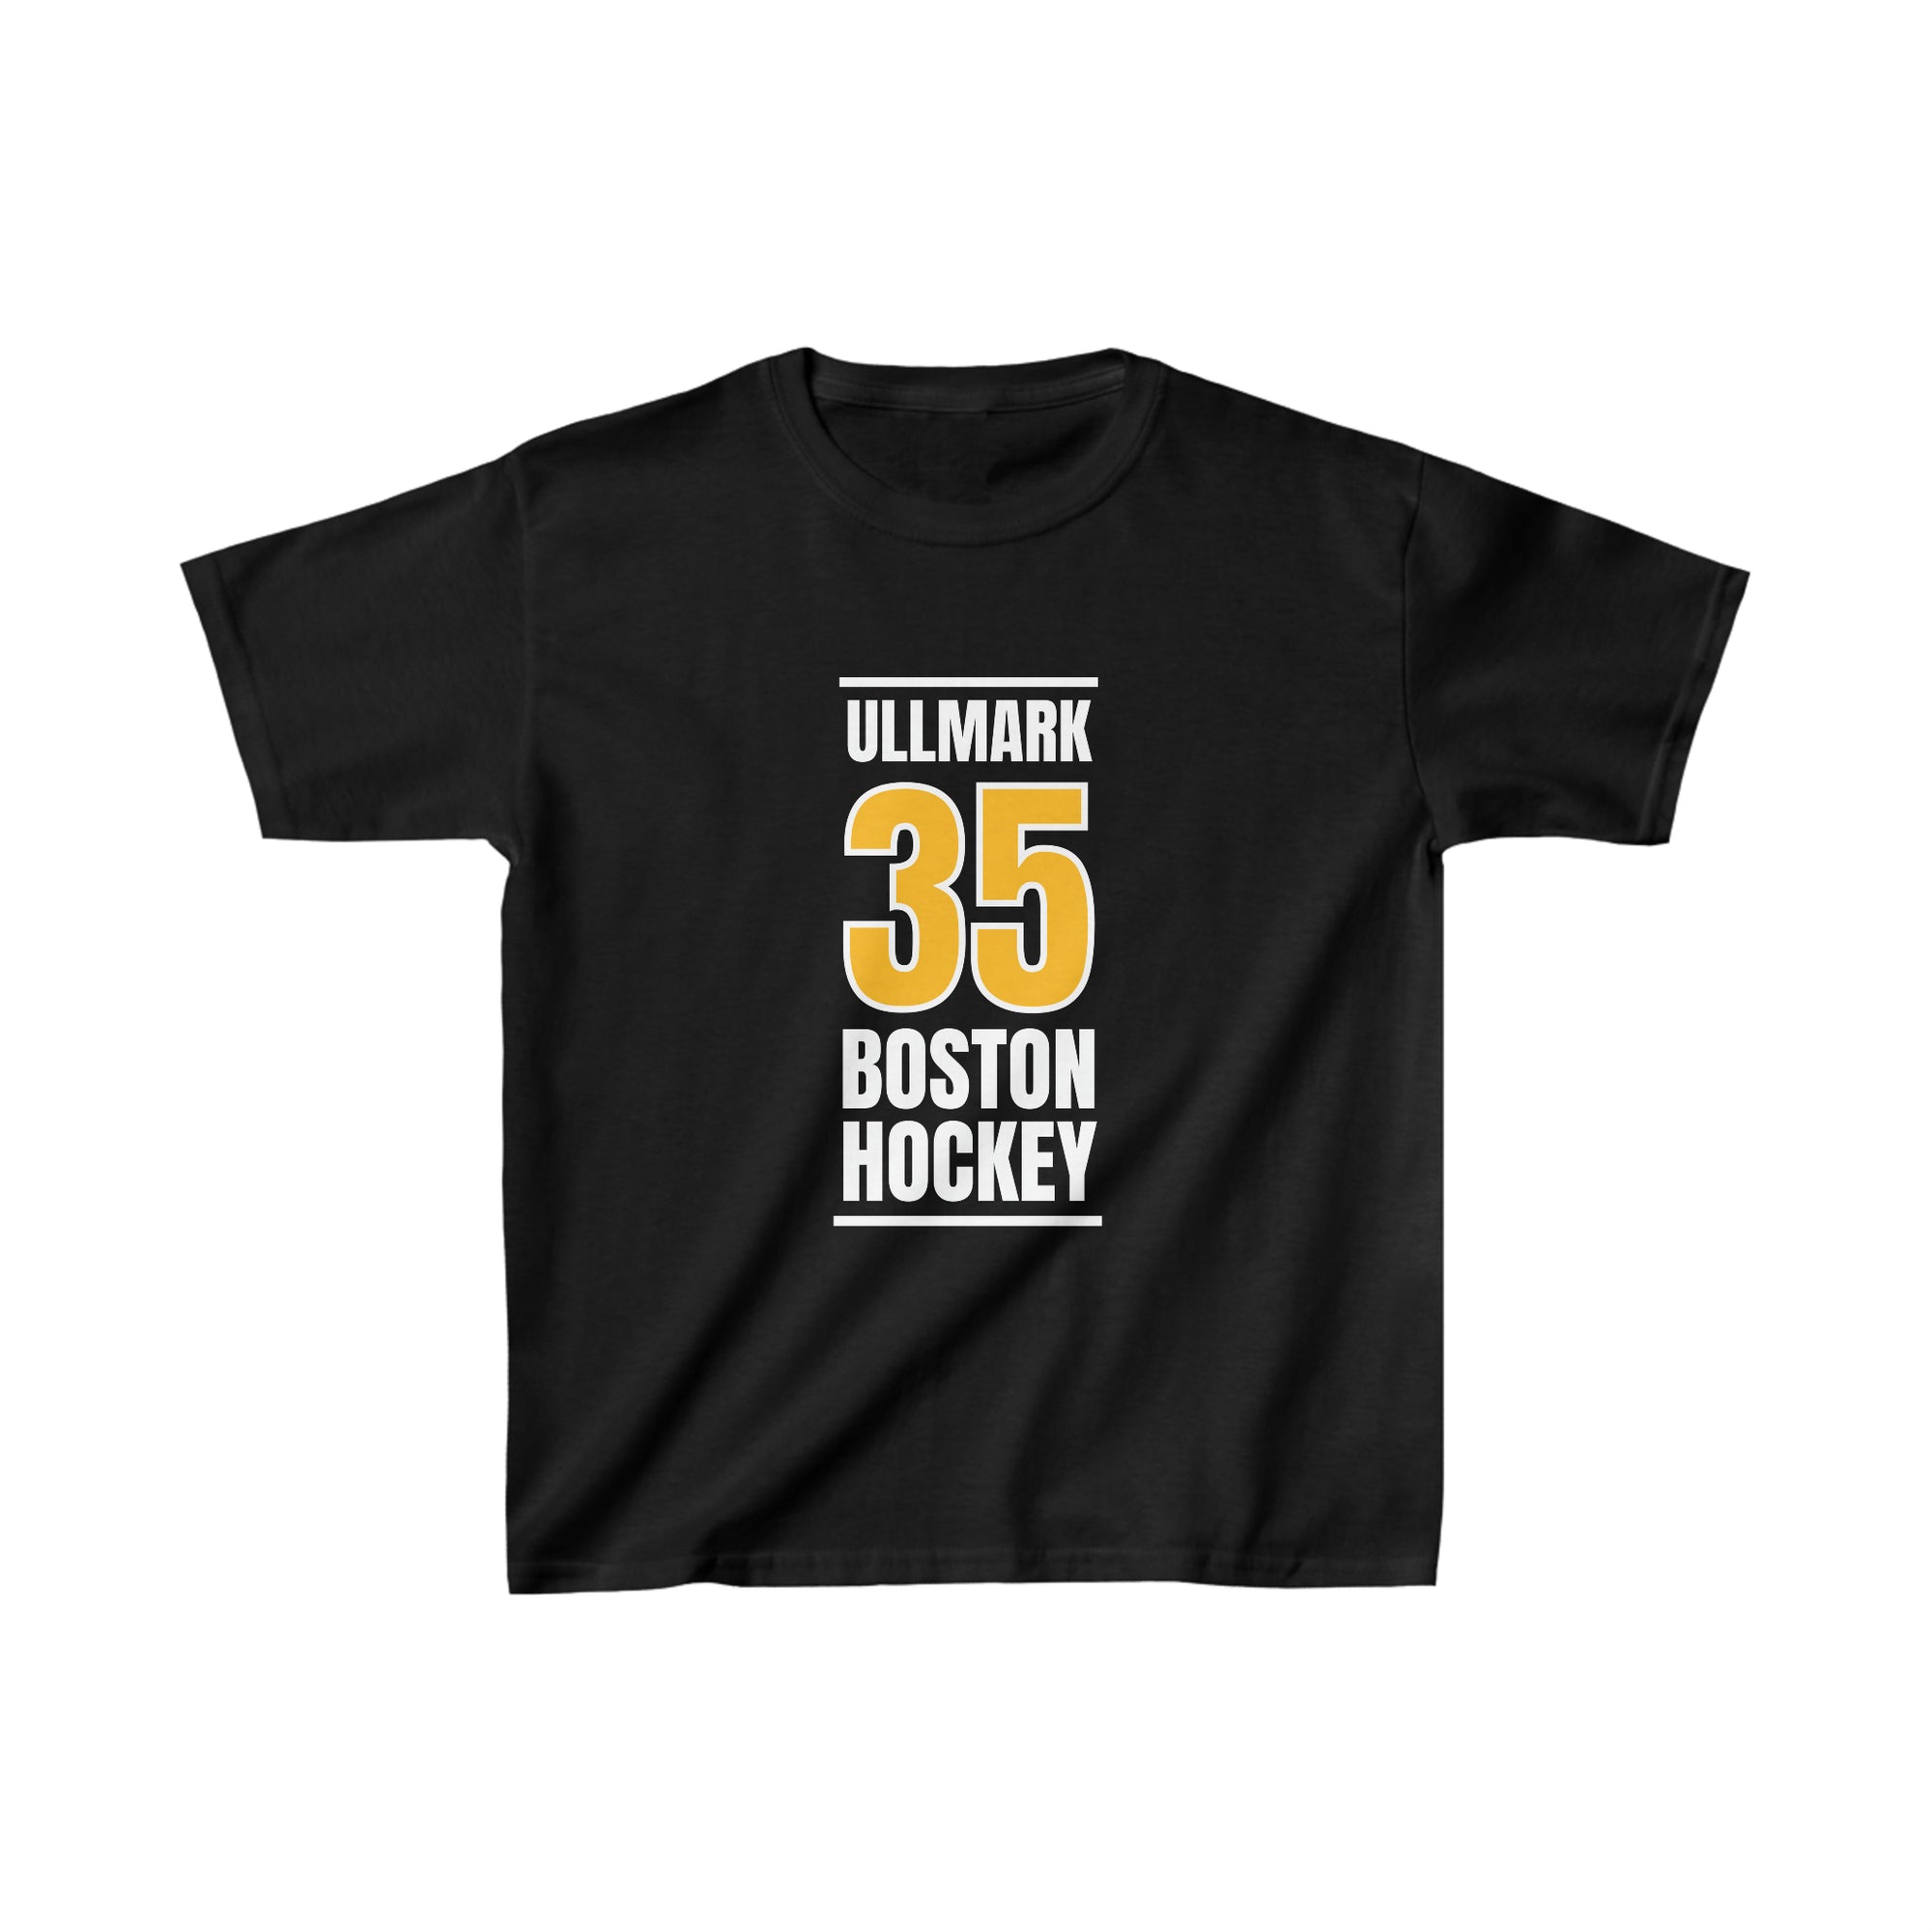 Ullmark 35 Boston Hockey Gold Vertical Design Kids Tee